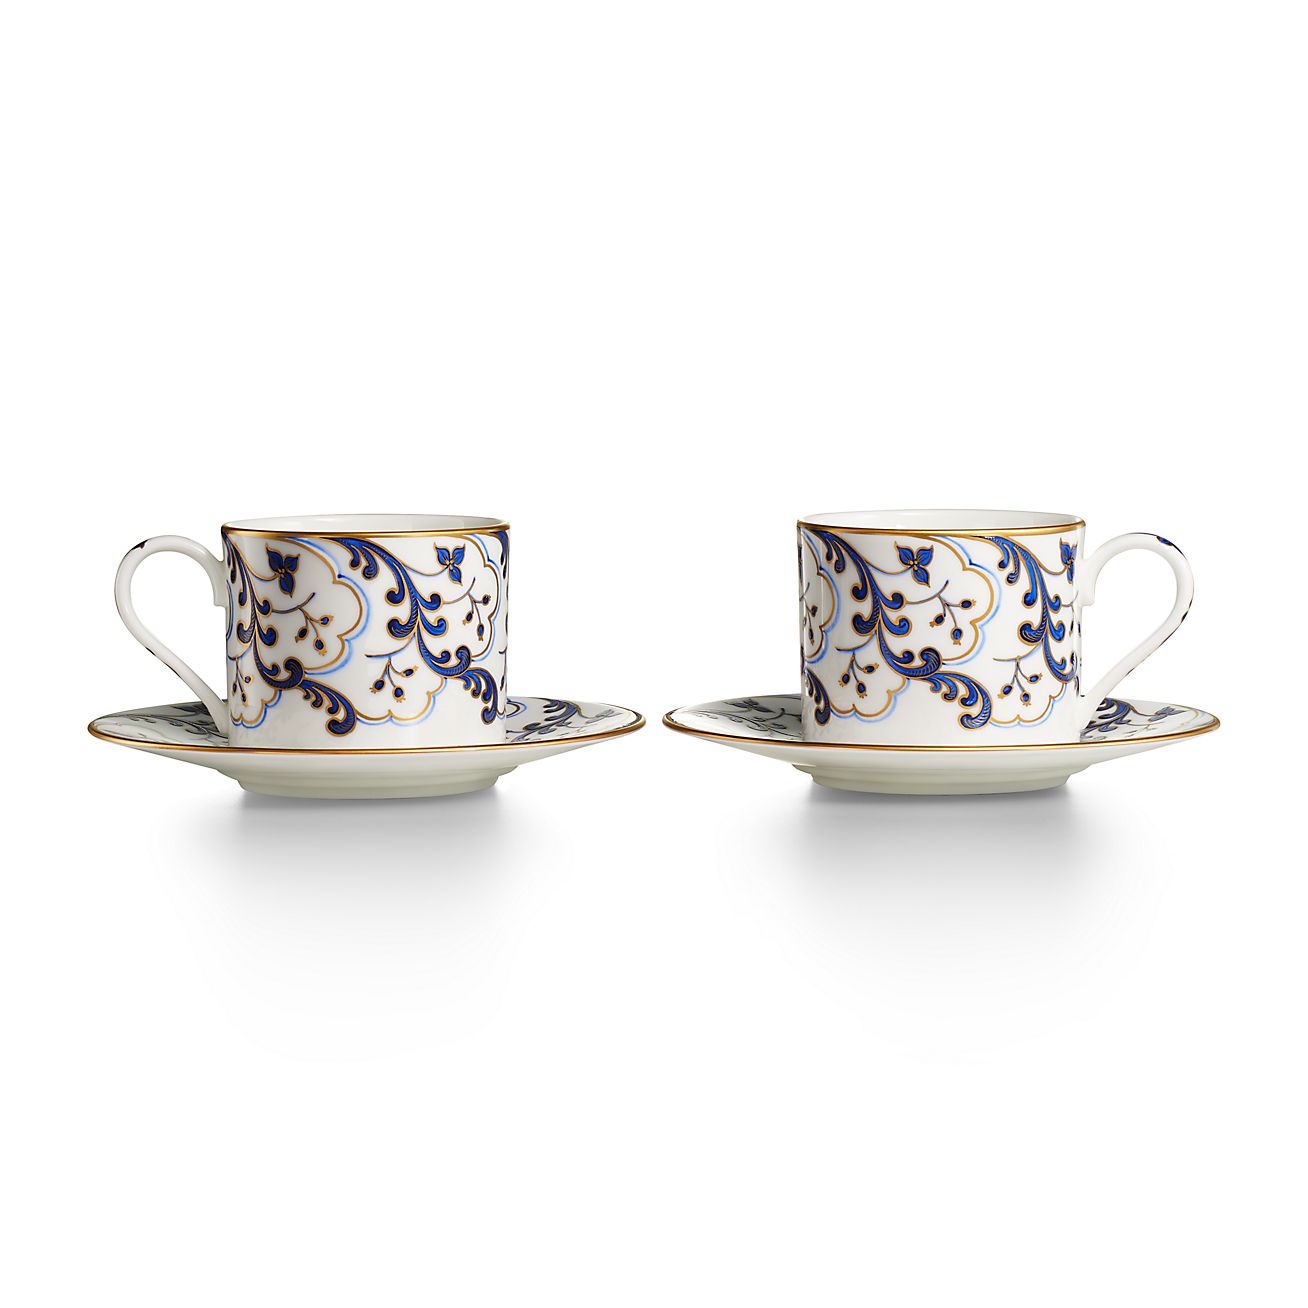 https://media.tiffany.com/is/image/Tiffany/EcomItemL2/valse-bleue-tea-cup-and-saucer-73243041_1055495_ED.jpg